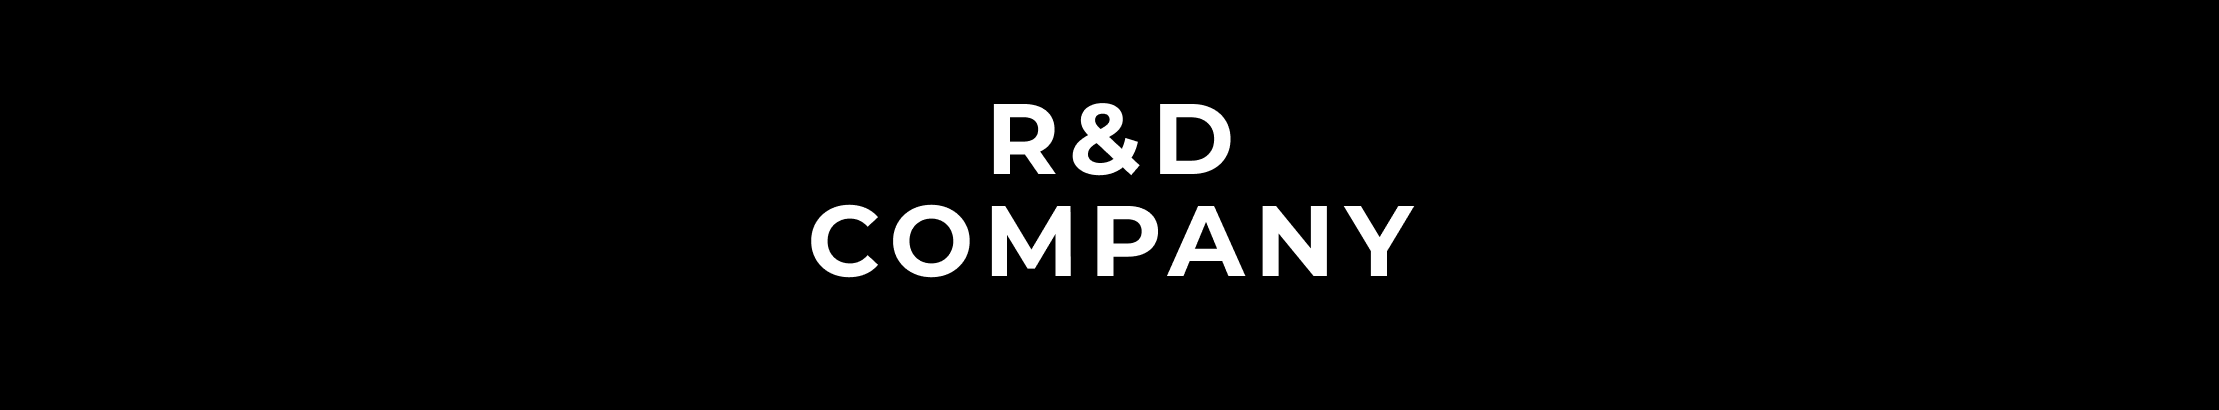 INTEND R&D COMPANY's profile banner